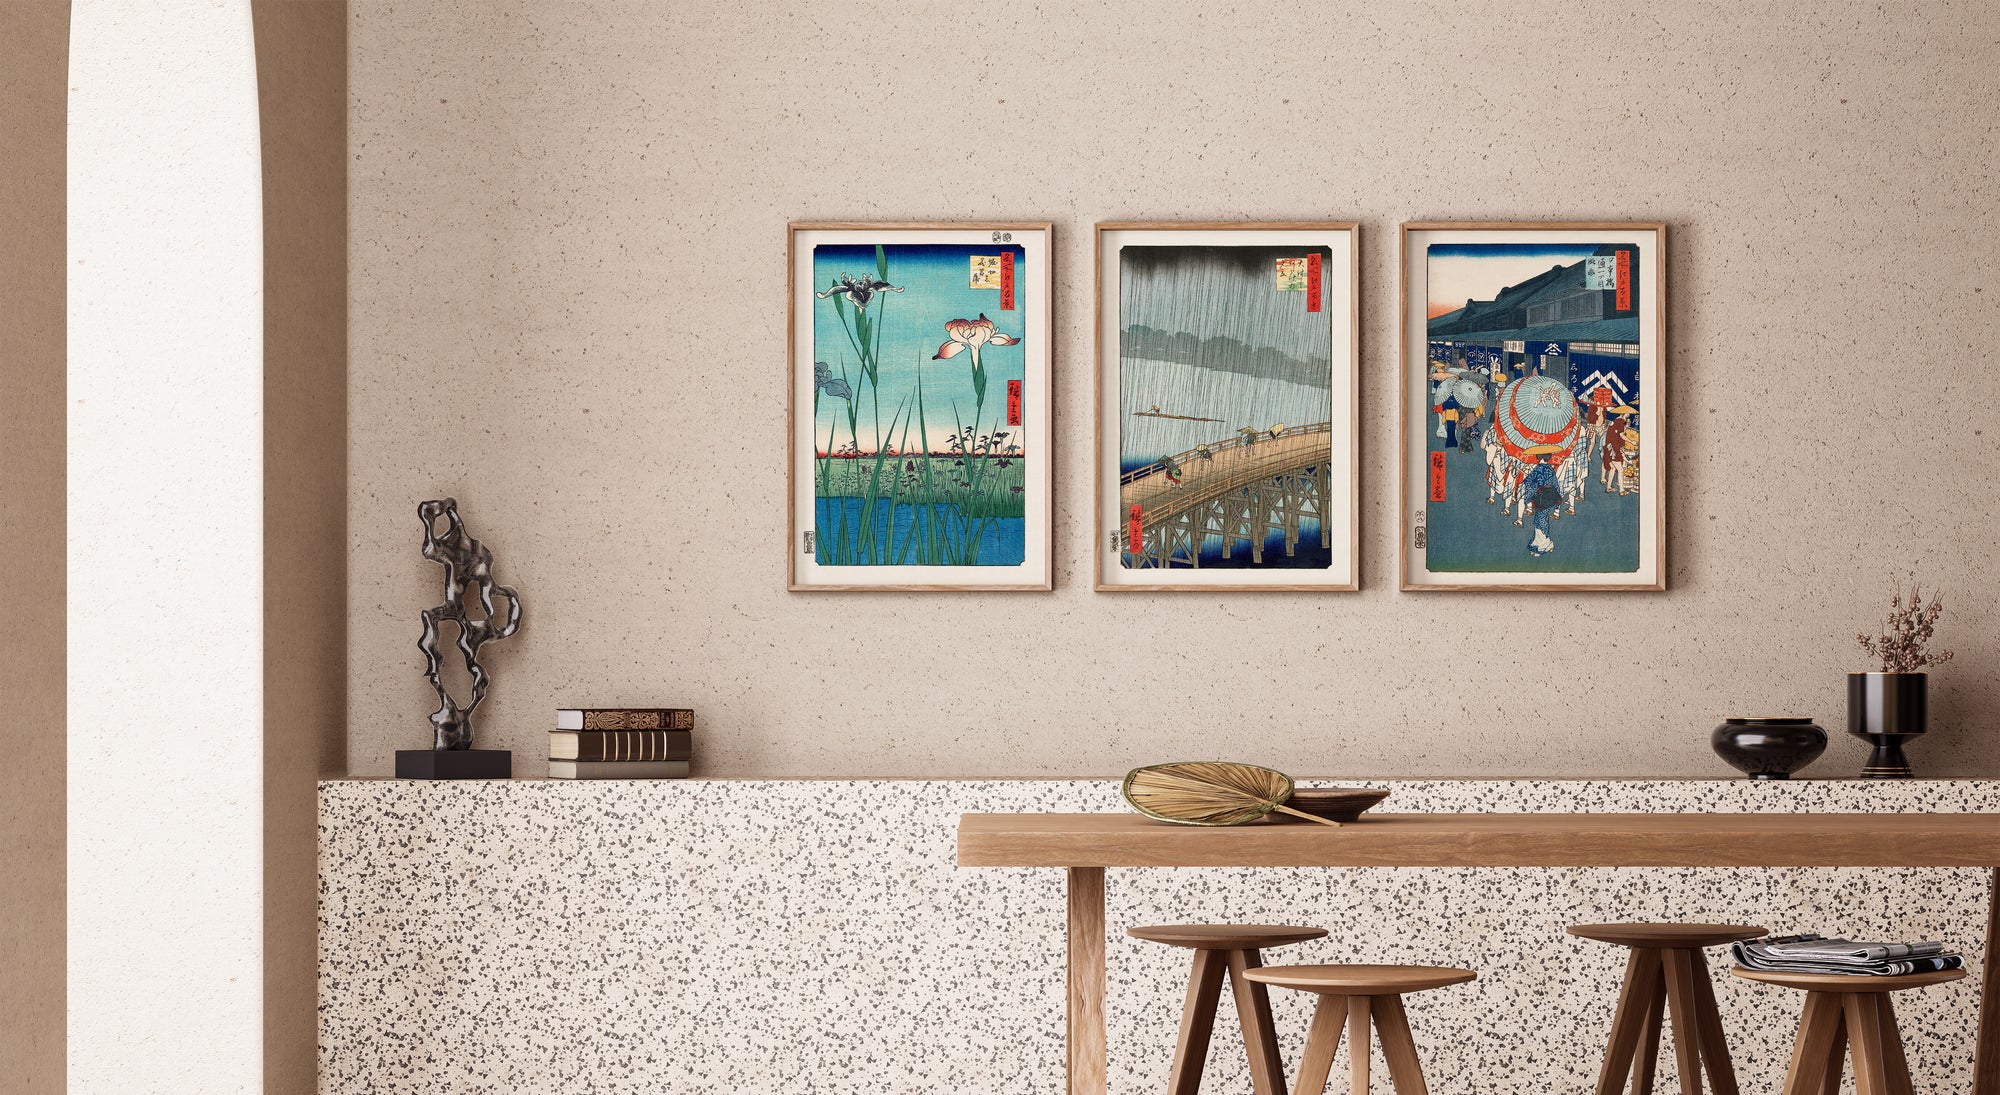 Three framed Japanese art pieces by Utagawa Hiroshige displayed on a wall